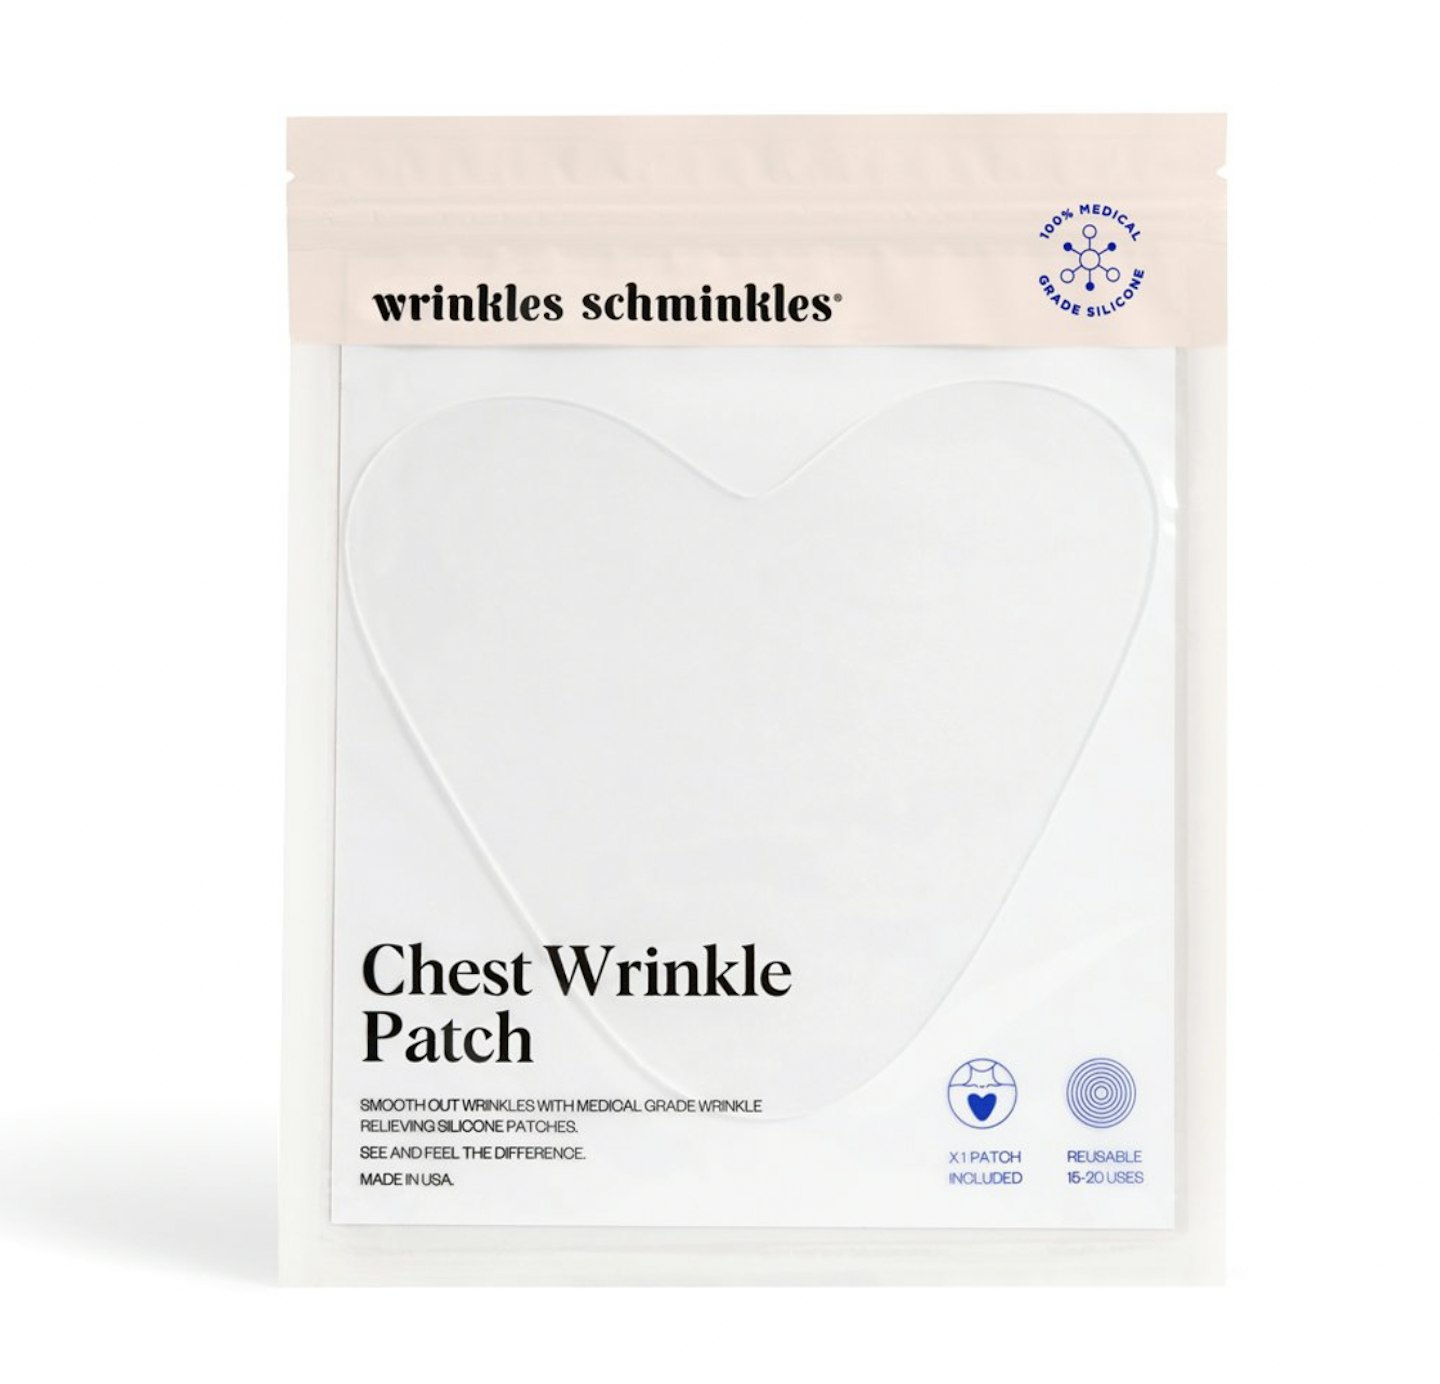 Wrinkles Schminkles Chest Wrinkle Patch, £30